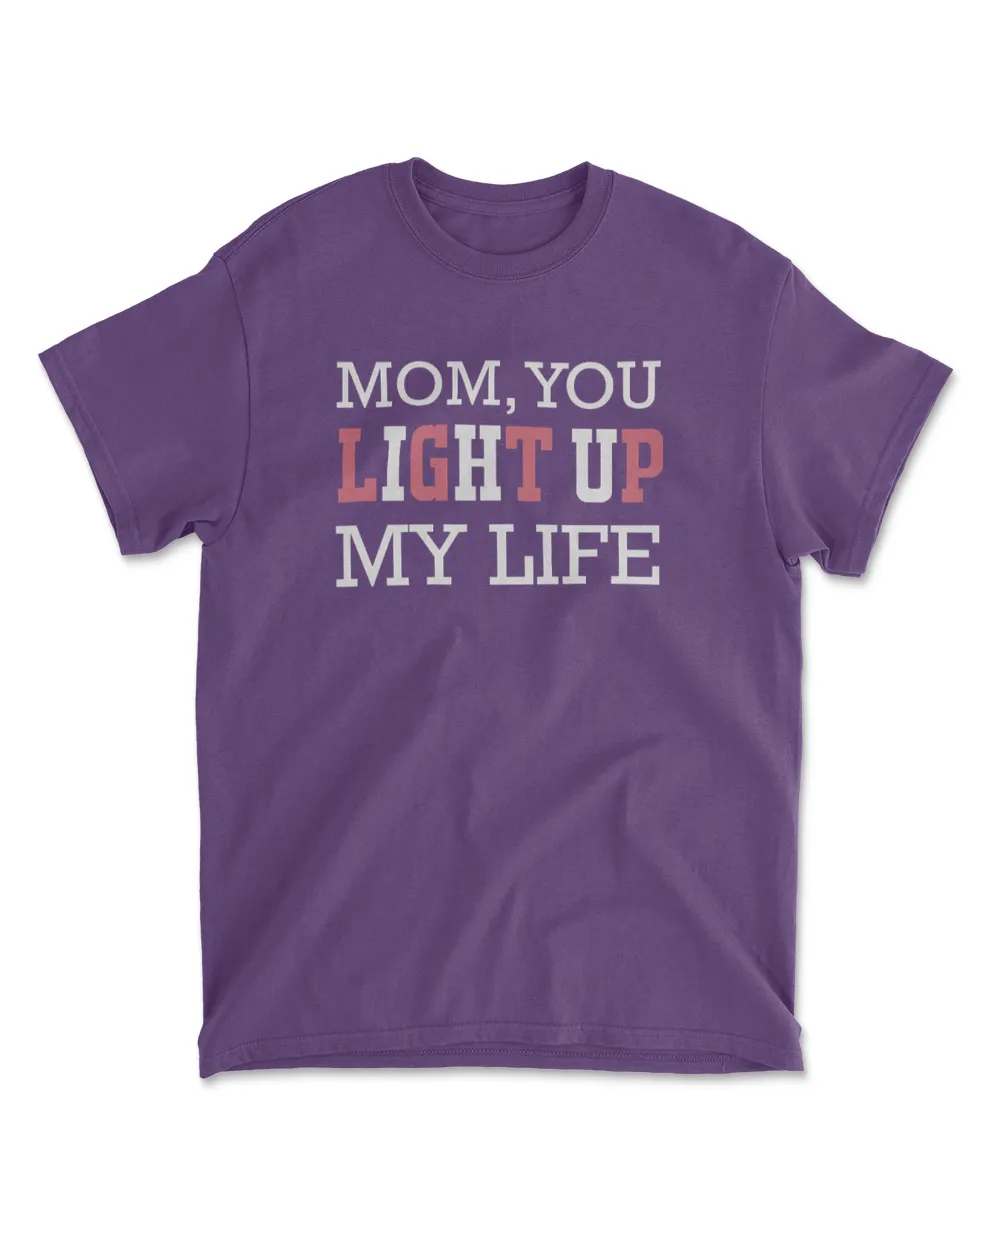 Mom, you light up my life t shirt